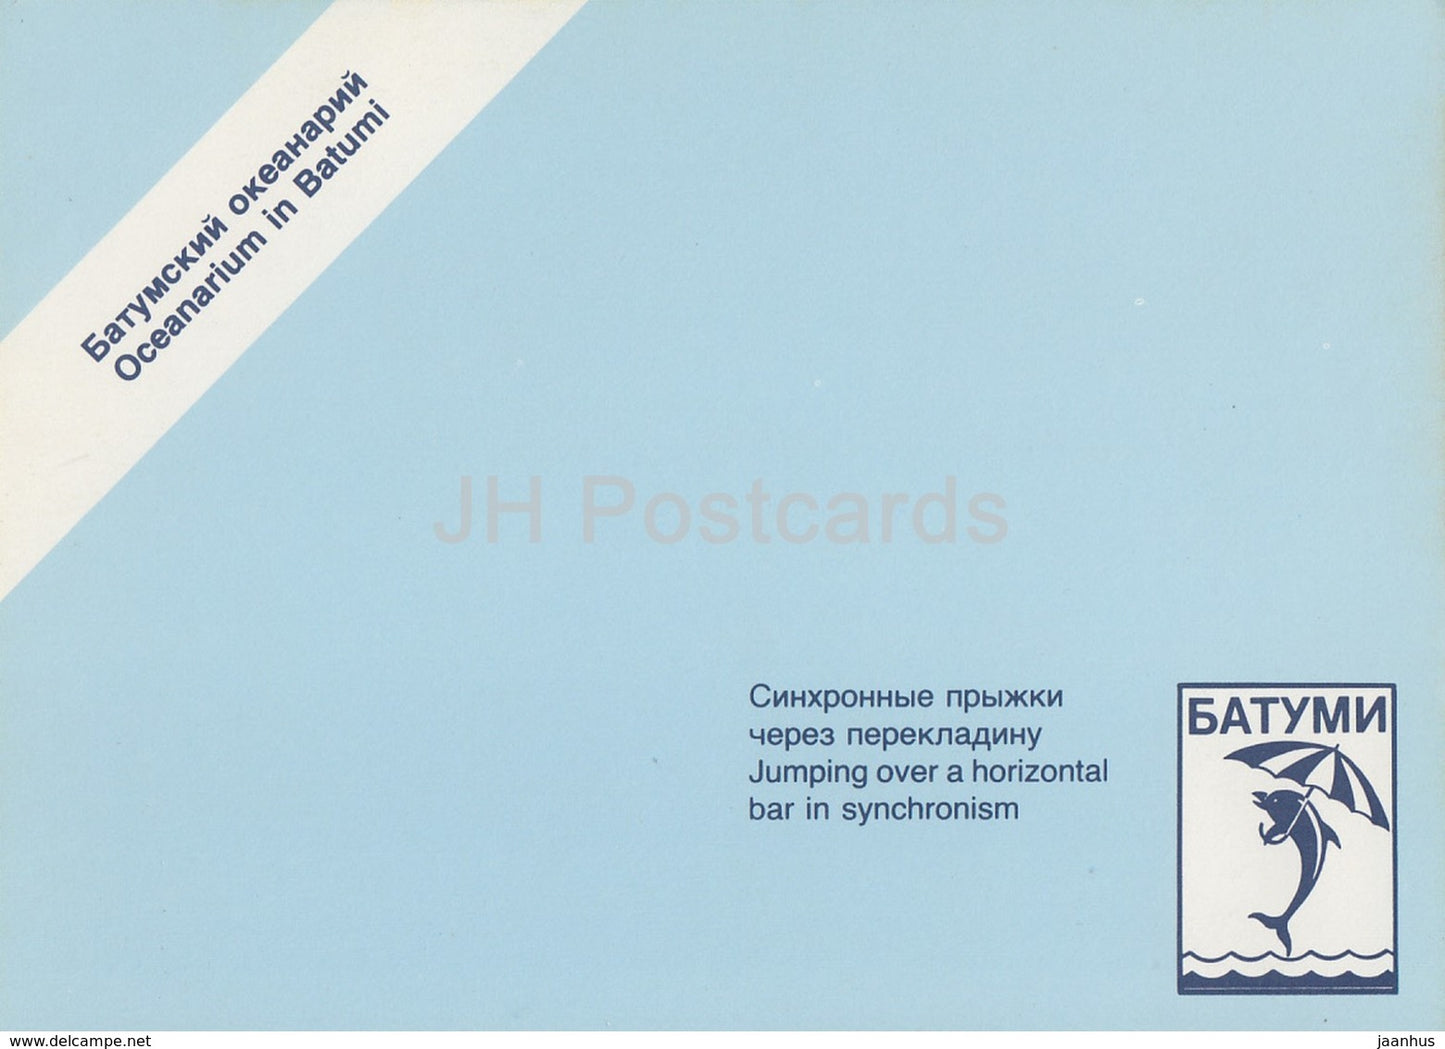 jumping over a horizontal bar in synchronism - dolphins - Oceanarium in Batumi - 1989 - Georgia USSR - unused - JH Postcards